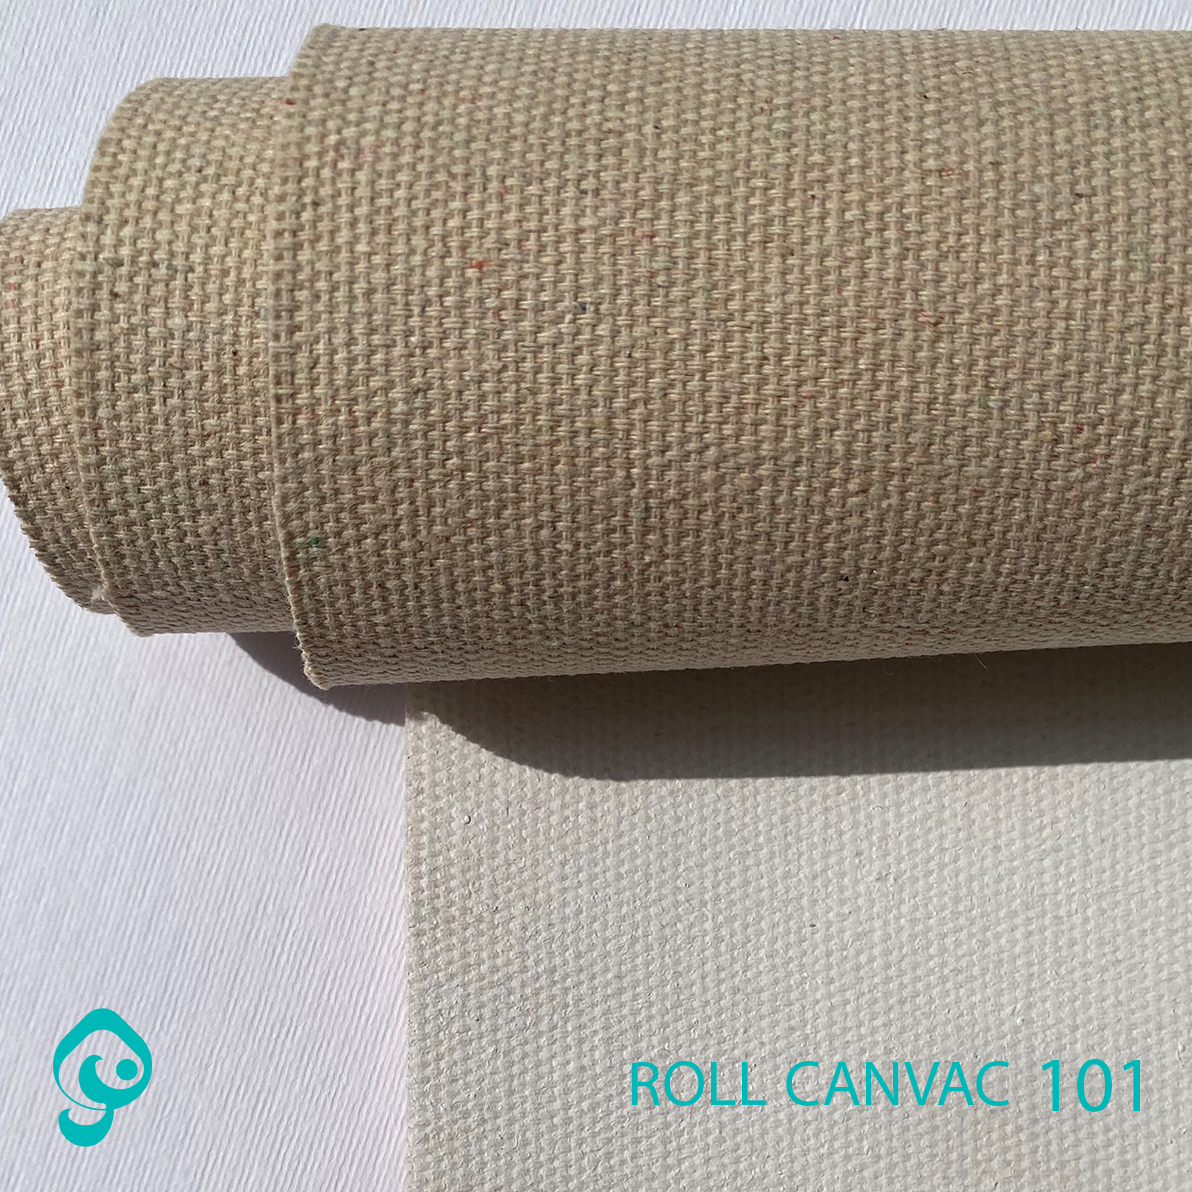 Roll canvas cotton رول كانفس قطن